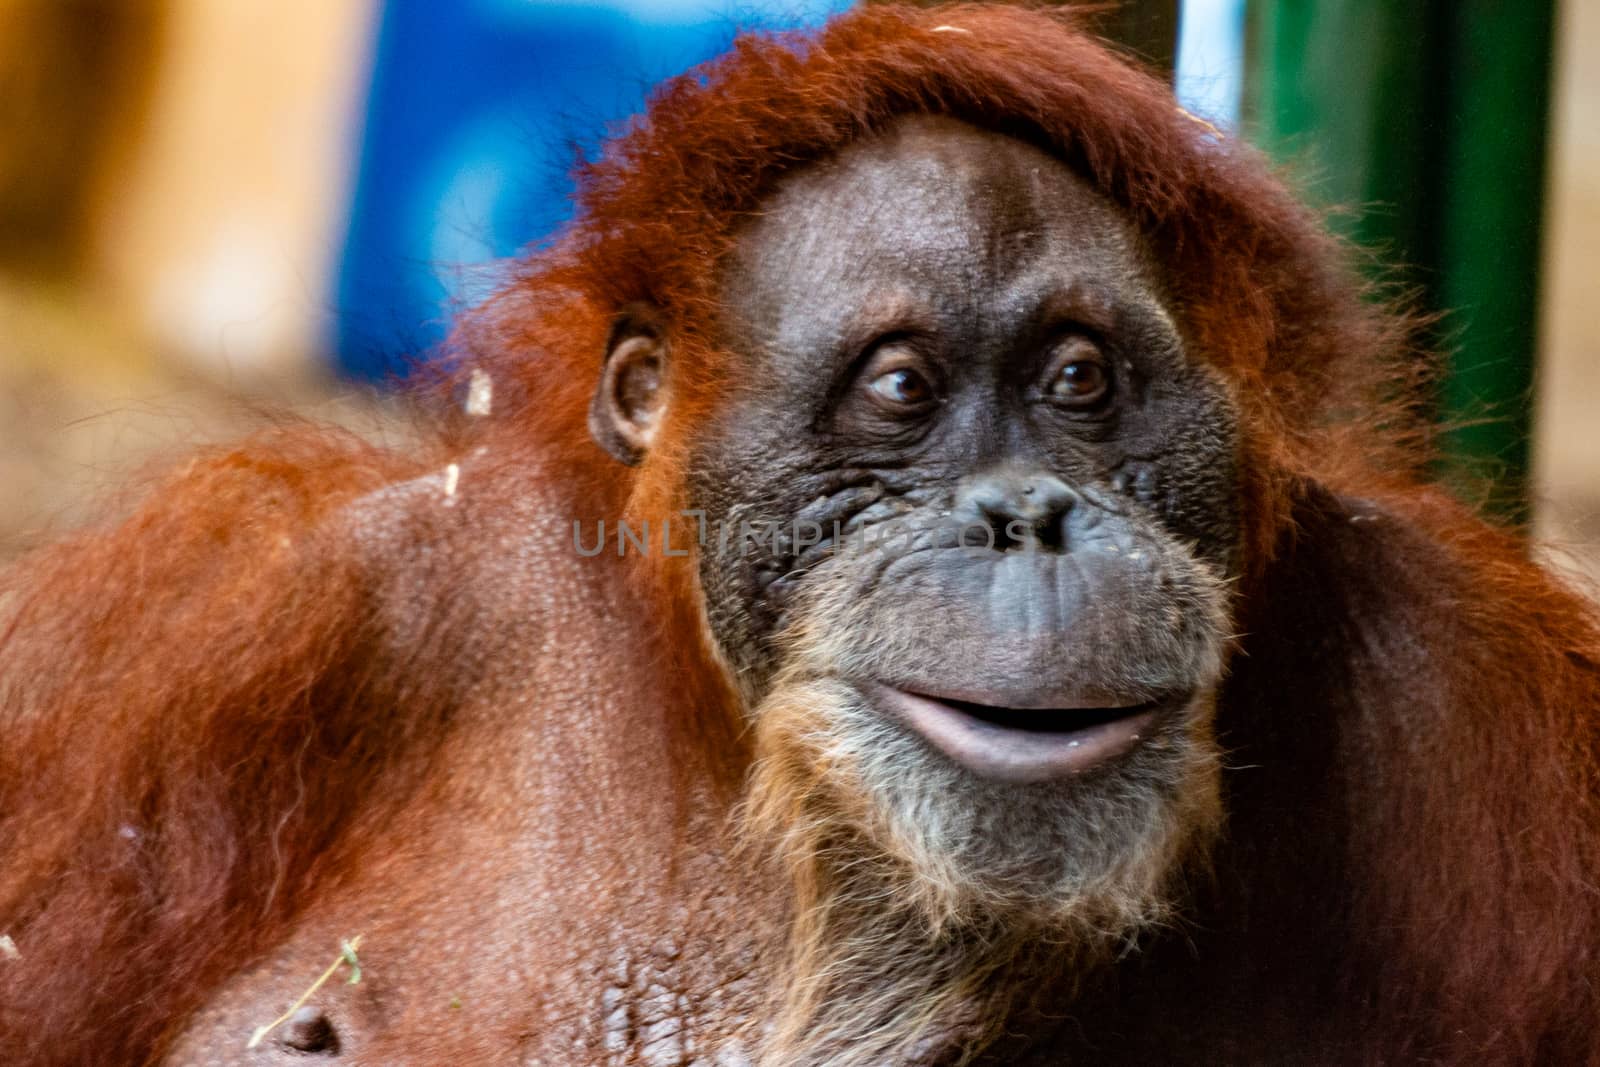 Orangutan. Close-up of female orangutan. Endangered due to habitat loss from Palm Oil plantations. by mynewturtle1